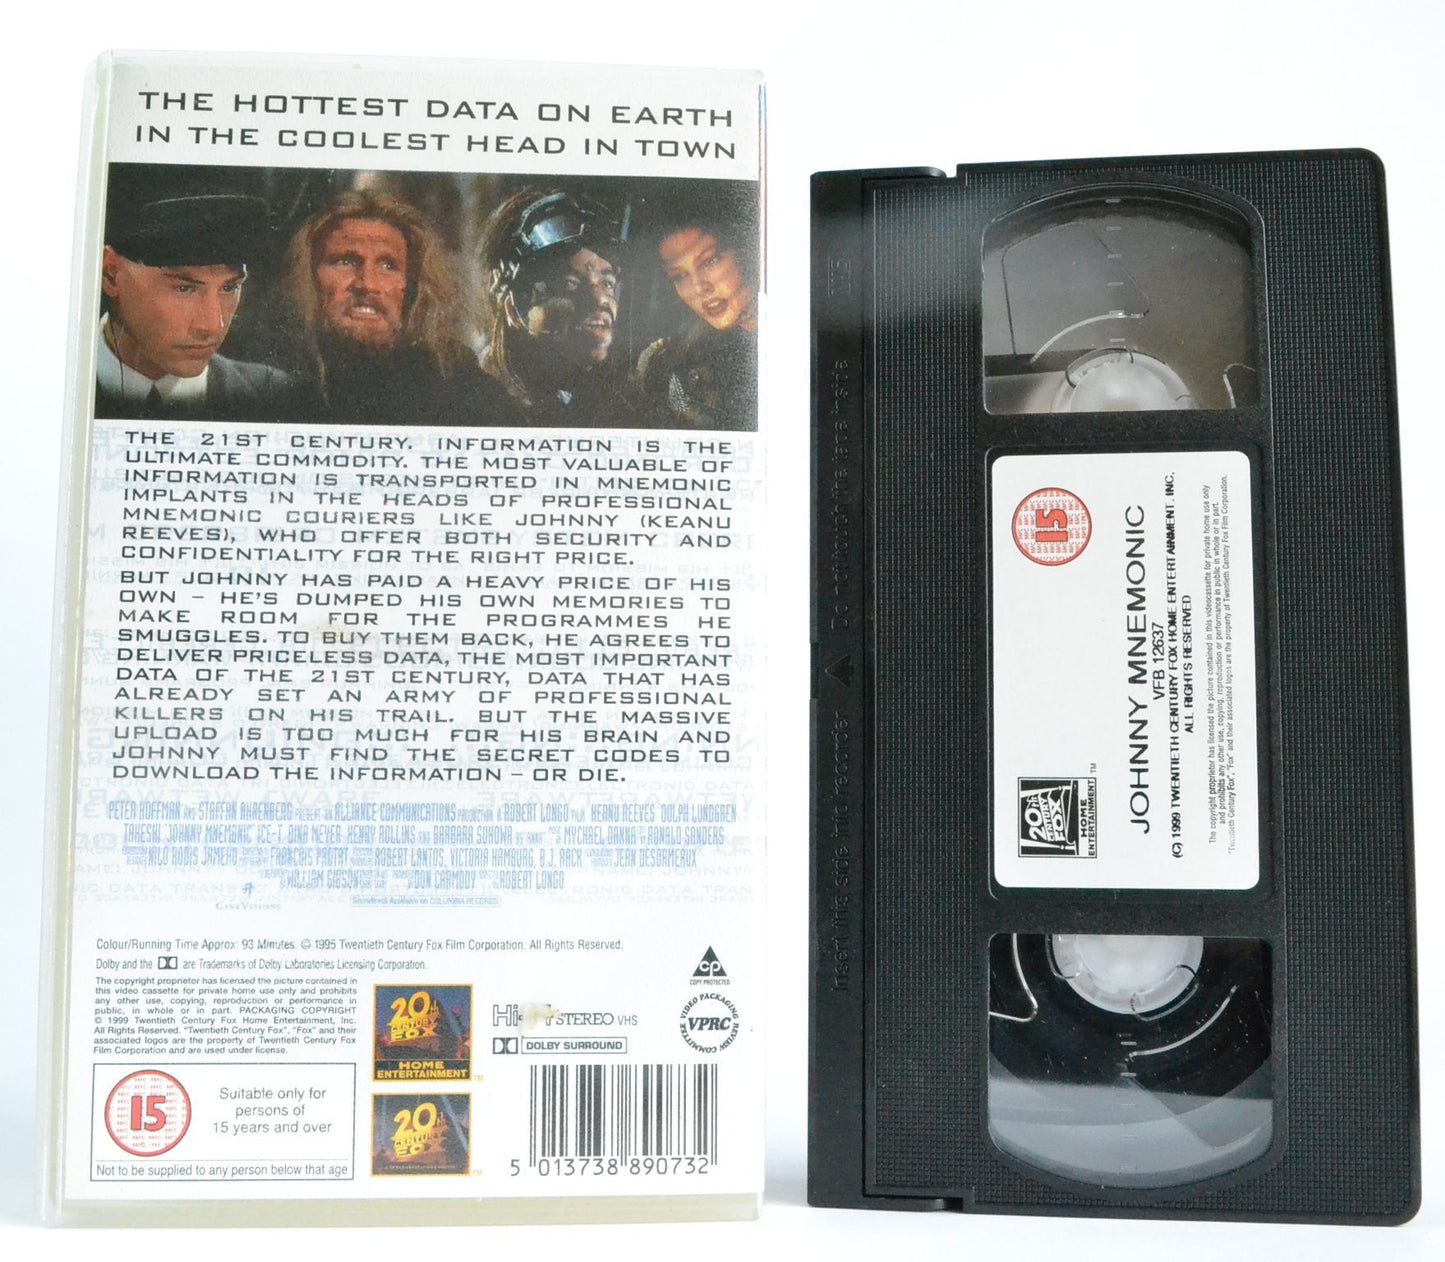 Johnny Mnemonic: [Keanu Reeves & Dolph Lundgren] Sci-Fi - Futurism - VHS-